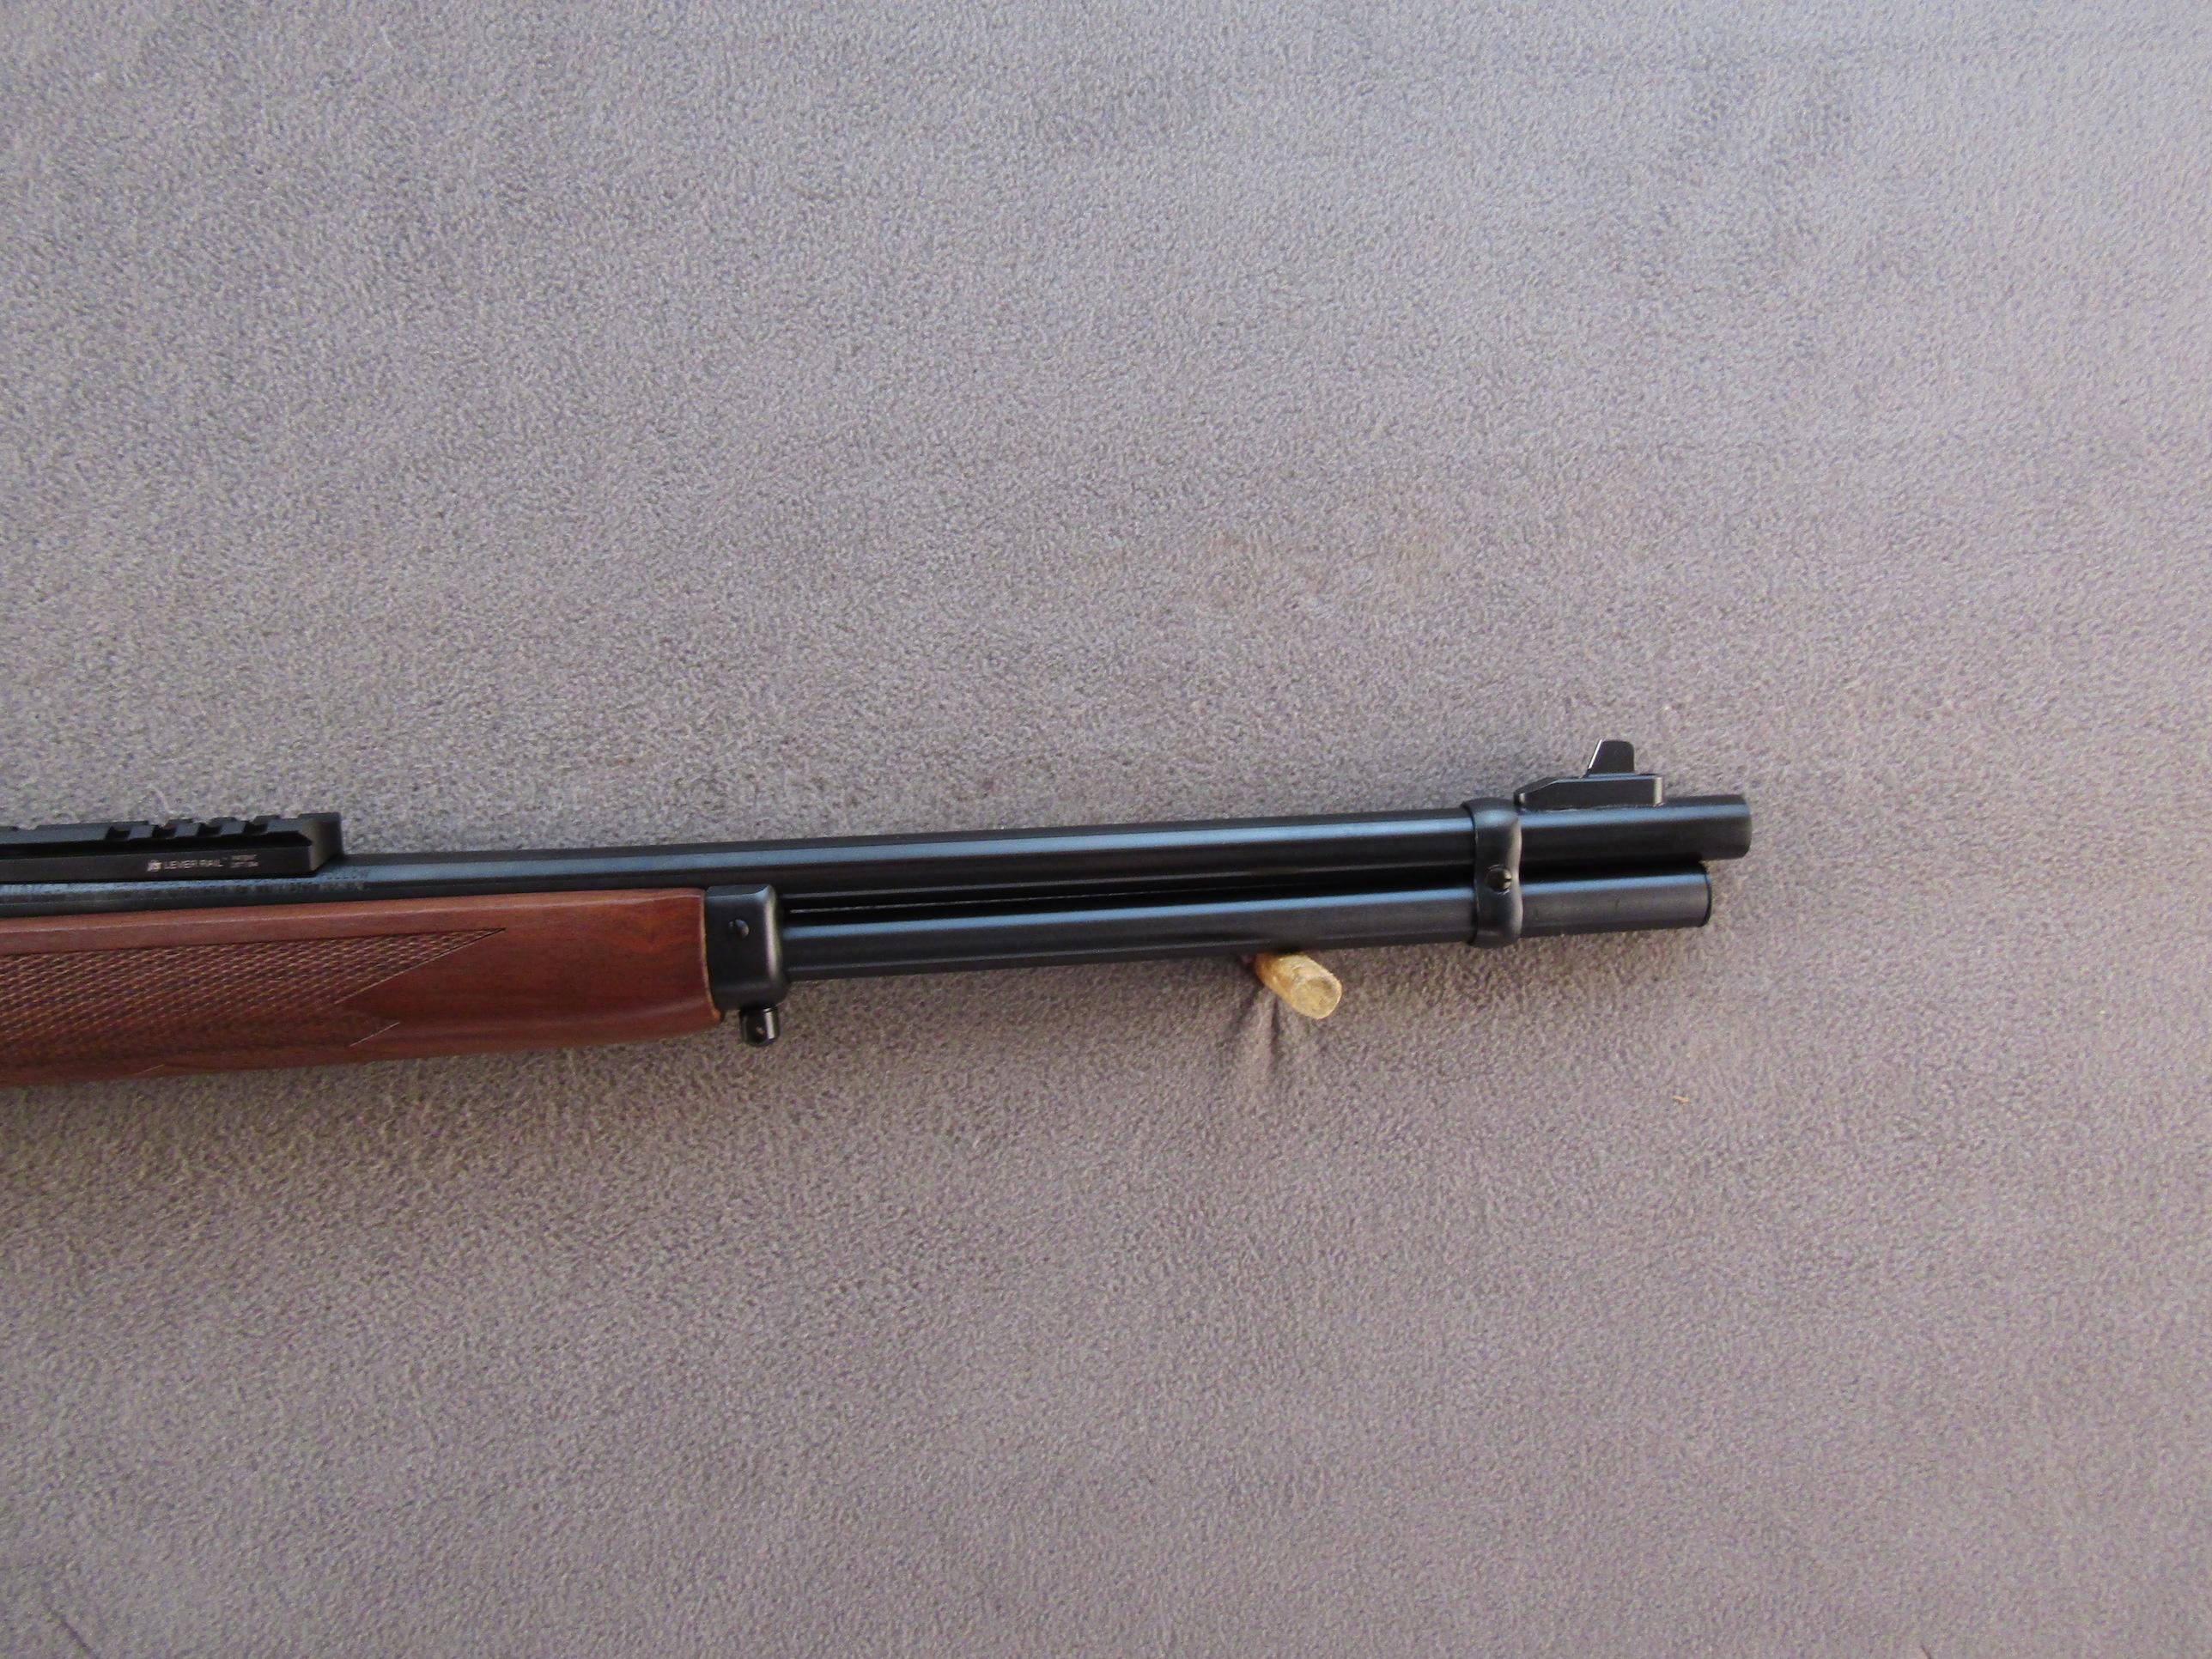 MARLIN Model 1894, Lever-Action Rifle, .44rem mag, S#MR97912F